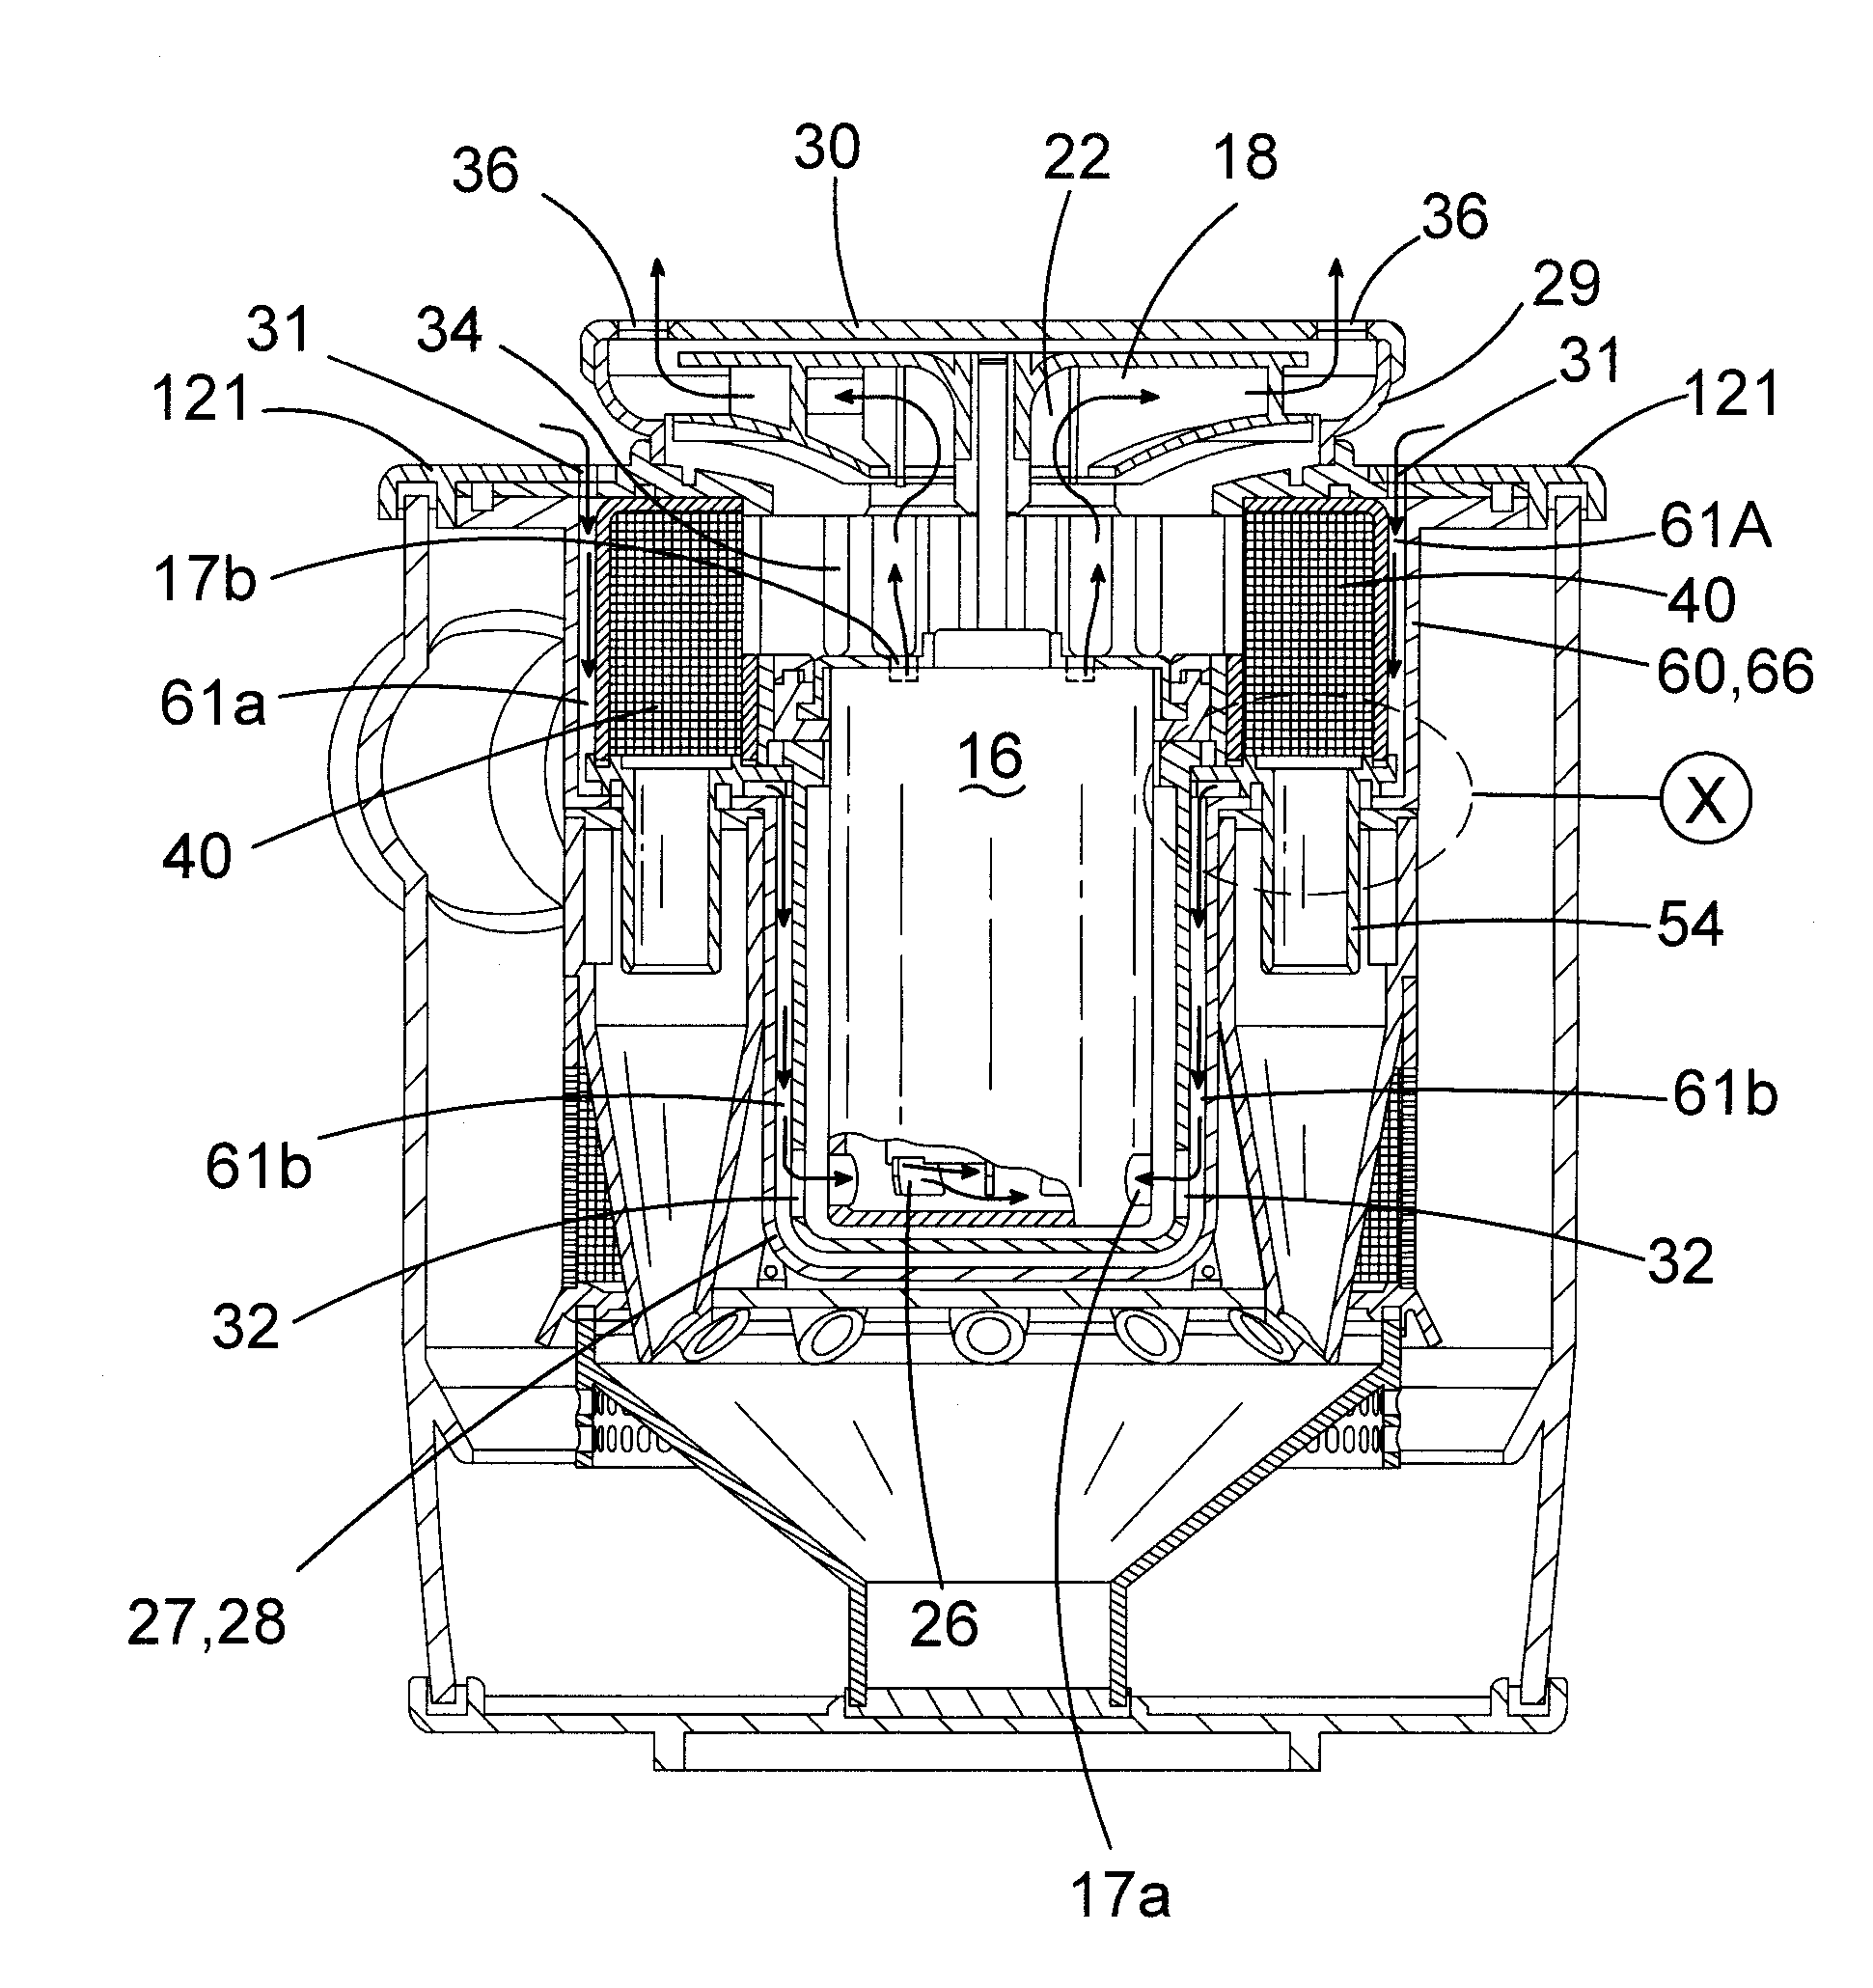 Motor, fan and cyclonic separation apparatus arrangement